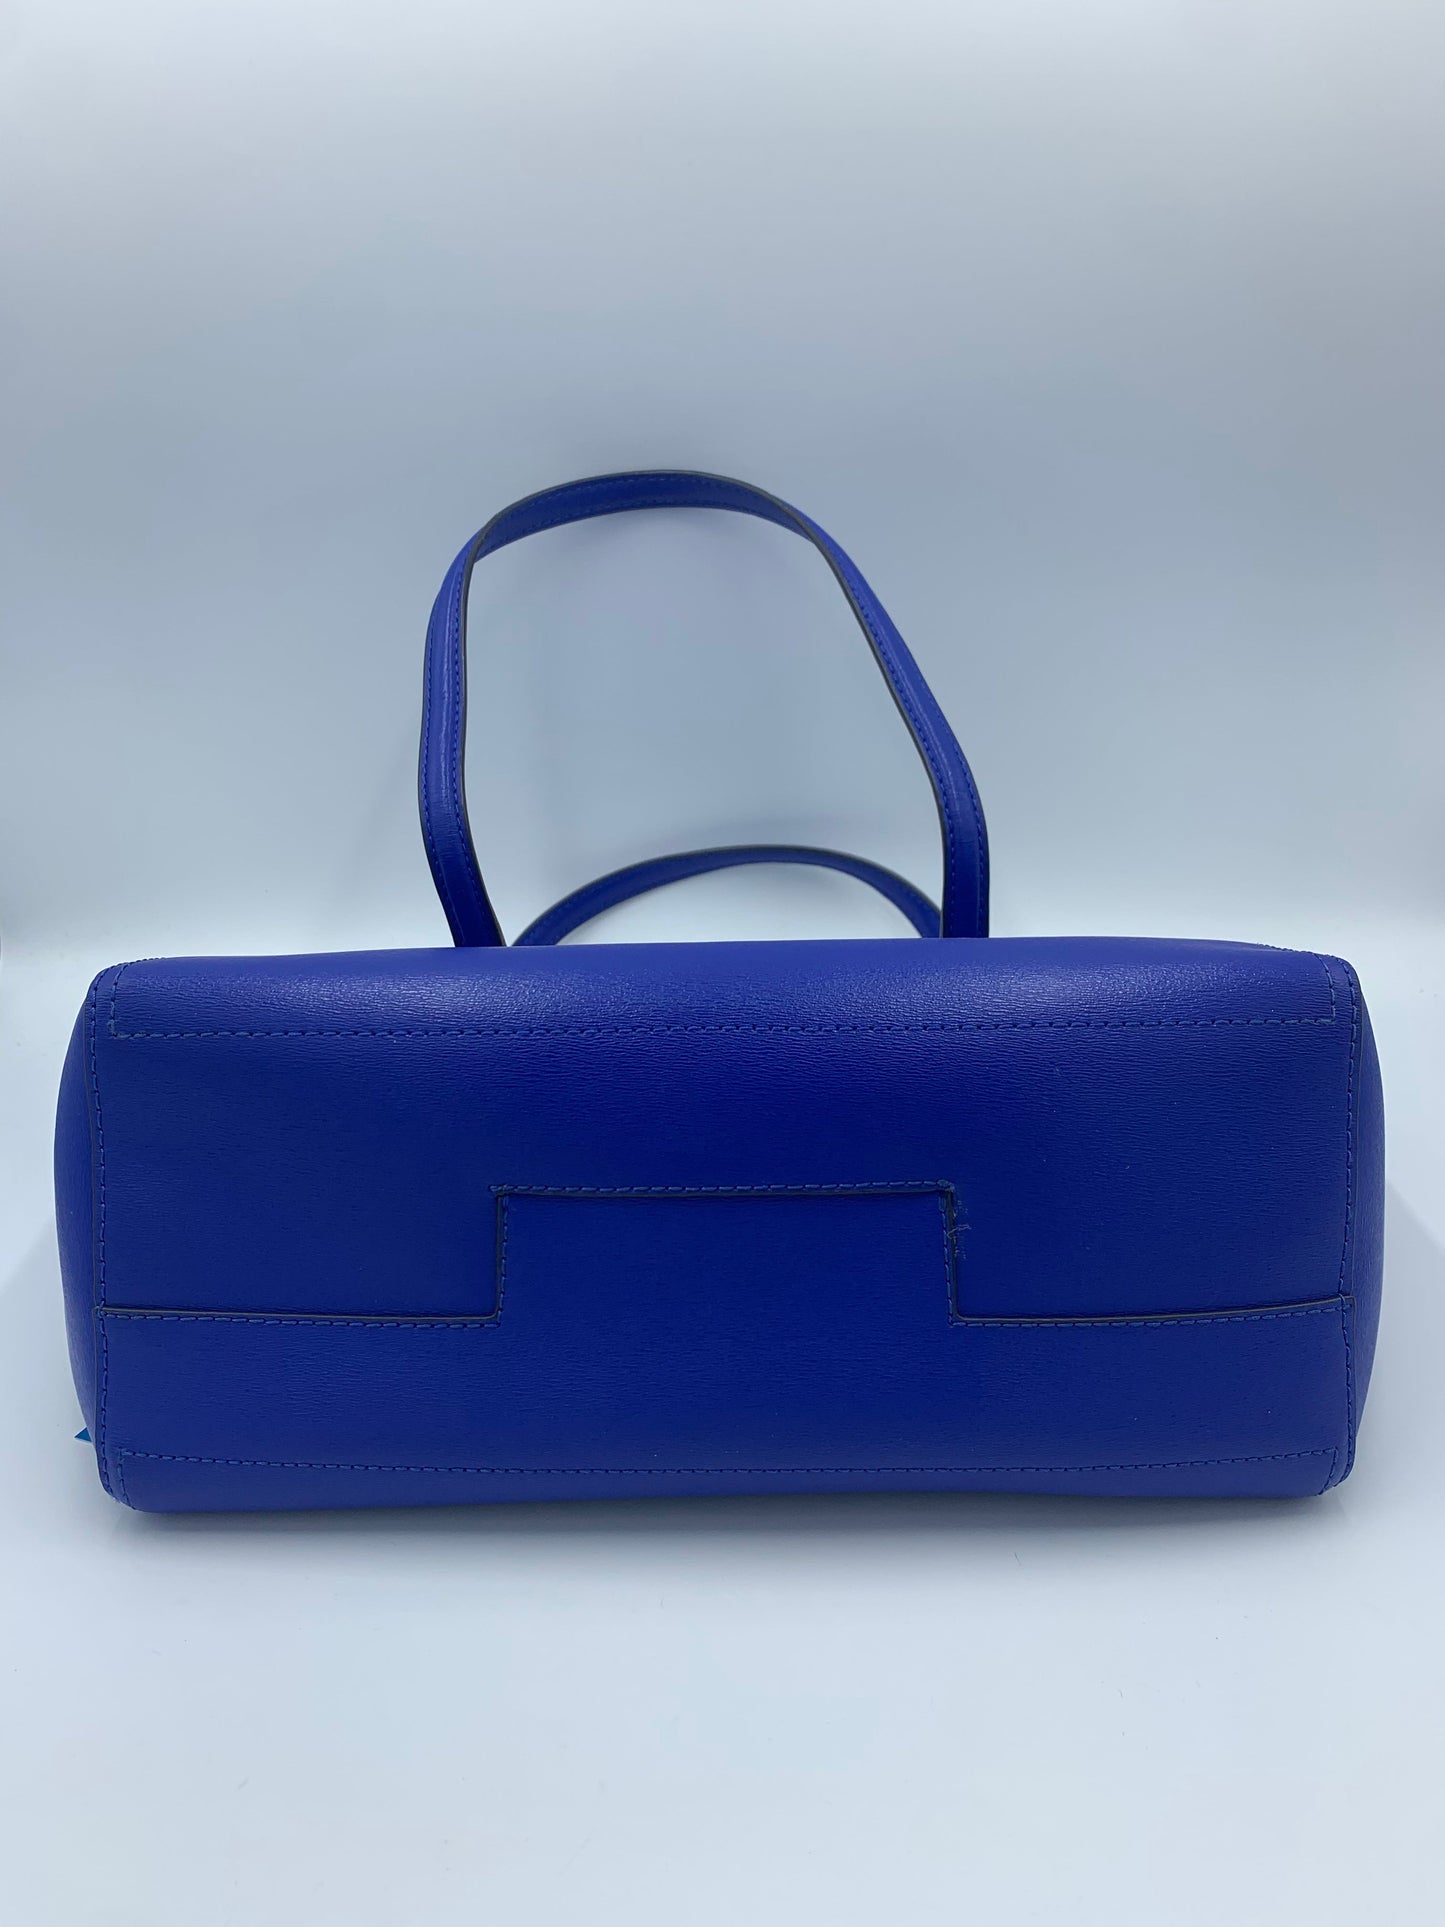 Handbag Designer Tory Burch